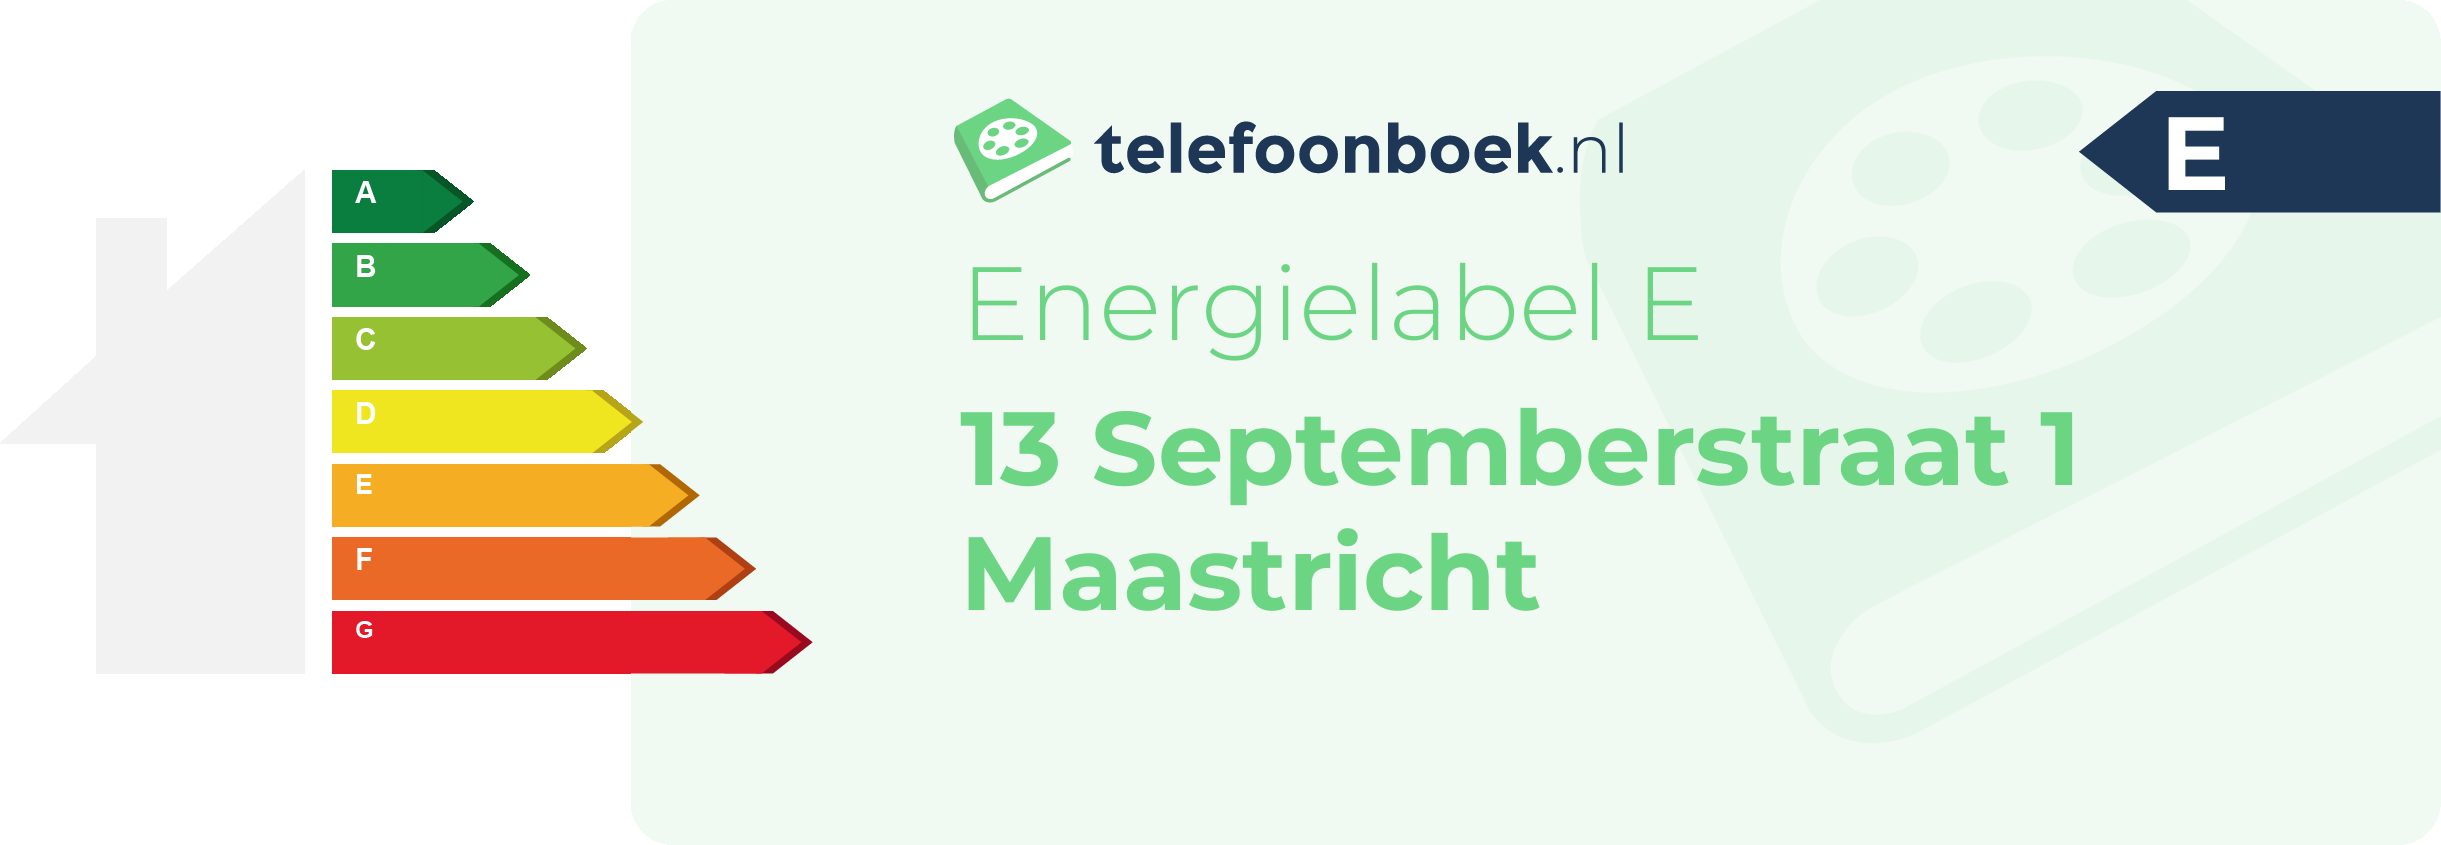 Energielabel 13 Septemberstraat 1 Maastricht